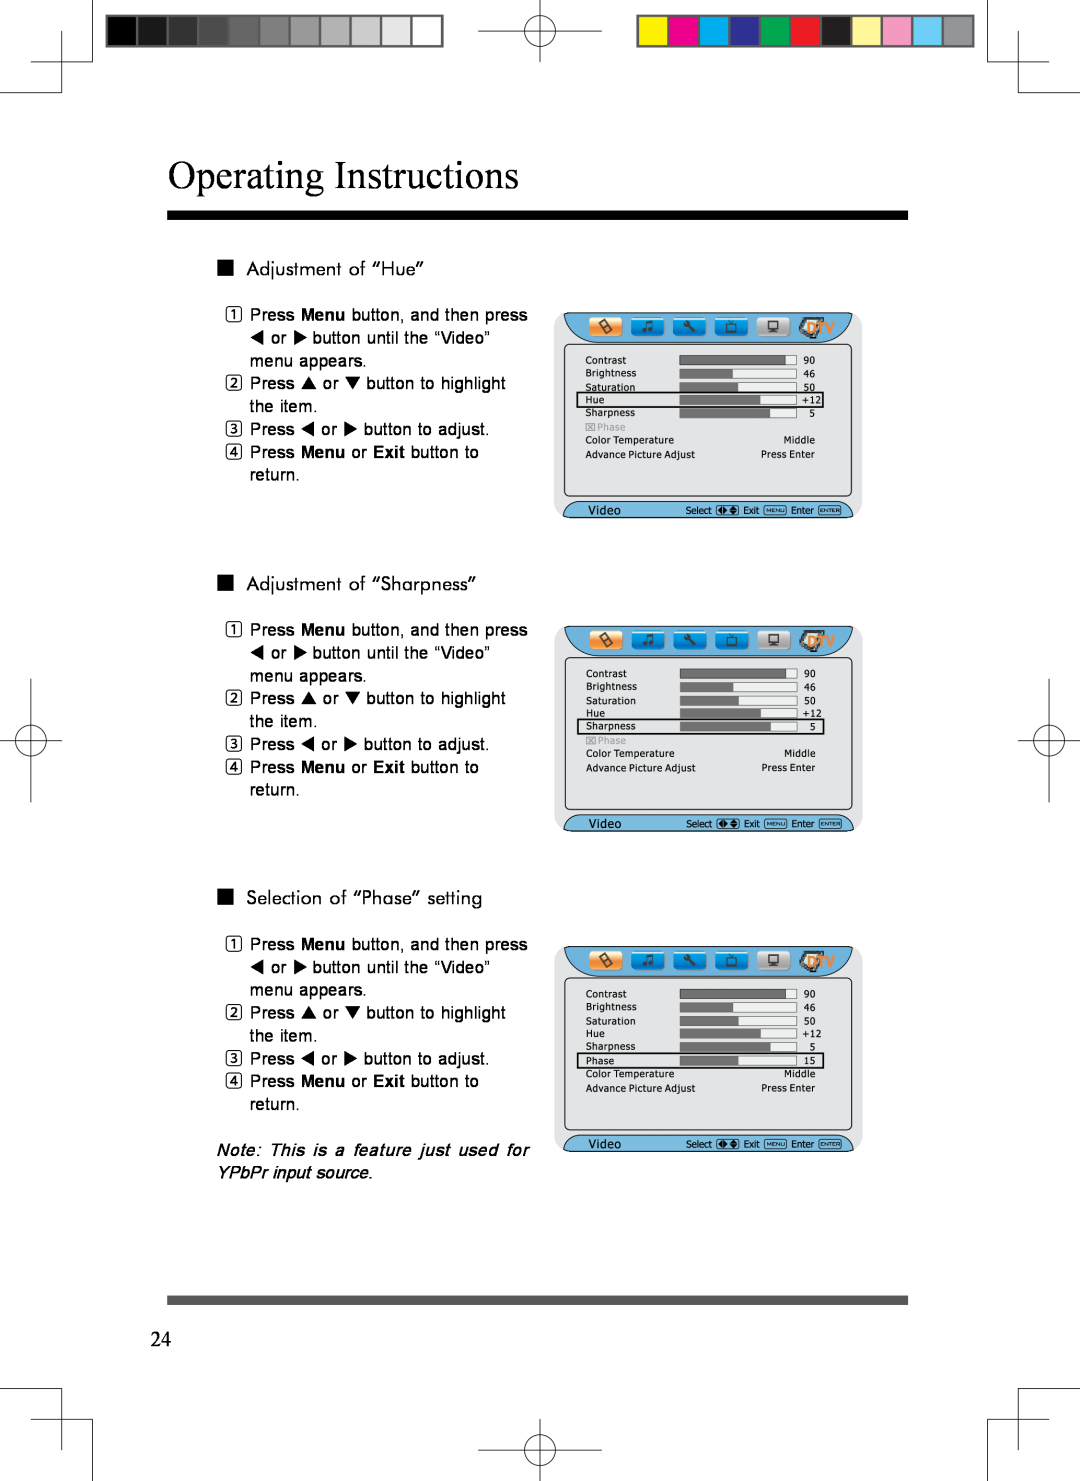 Scott LCT37SHA manual Adjustment of “Hue”, Adjustment of “Sharpness”, Selection of “Phase” setting, Operating Instructions 